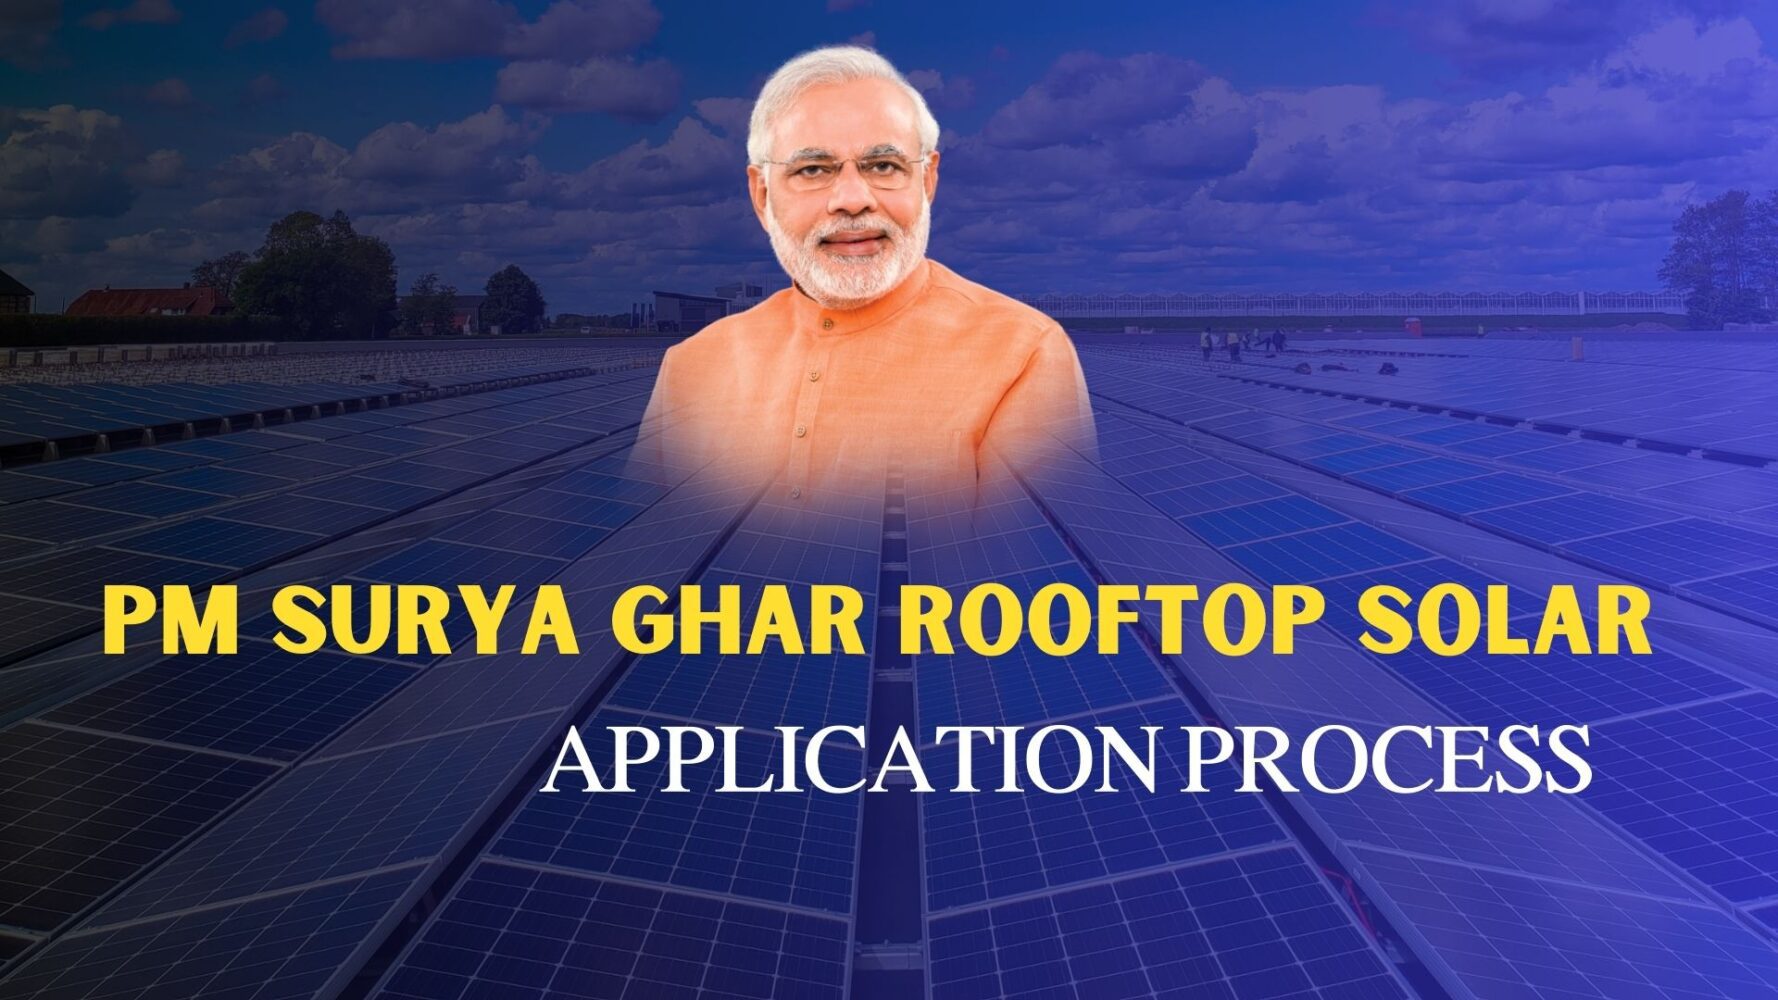 PM Surya Ghar Rooftop Solar Application Process